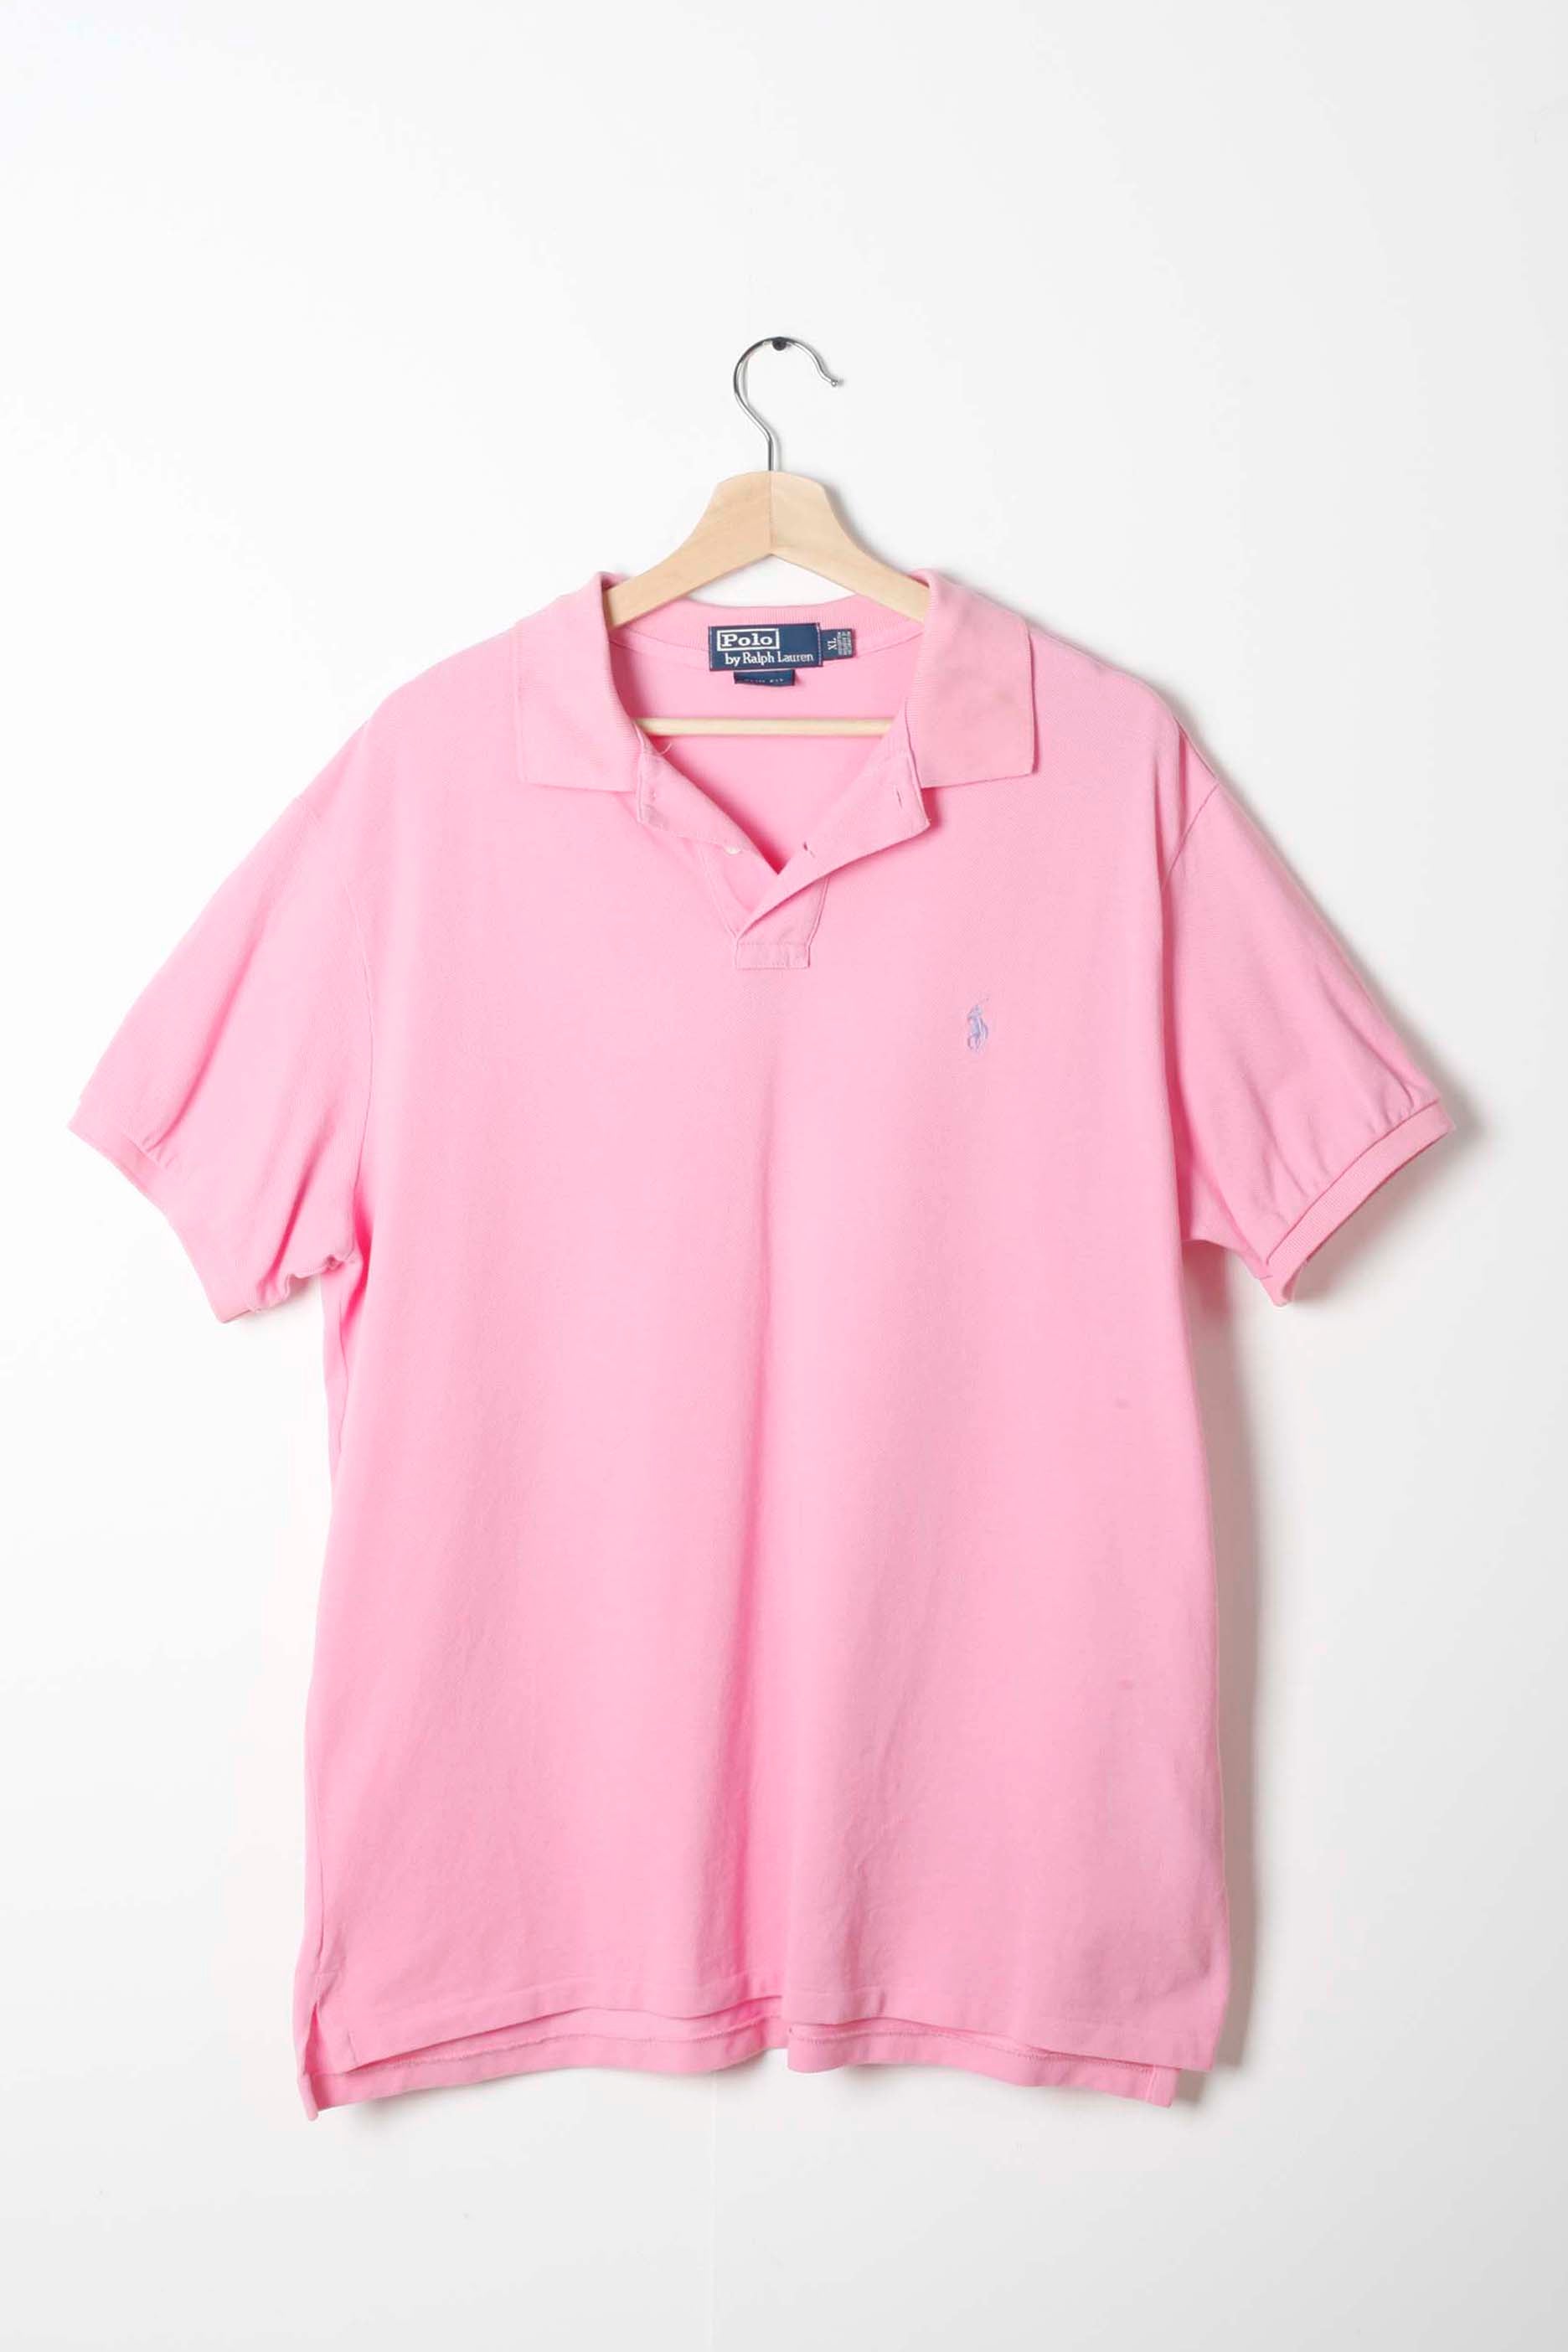 Mens Polo Ralph Lauren Pink Polo Shirt  (XLarge)